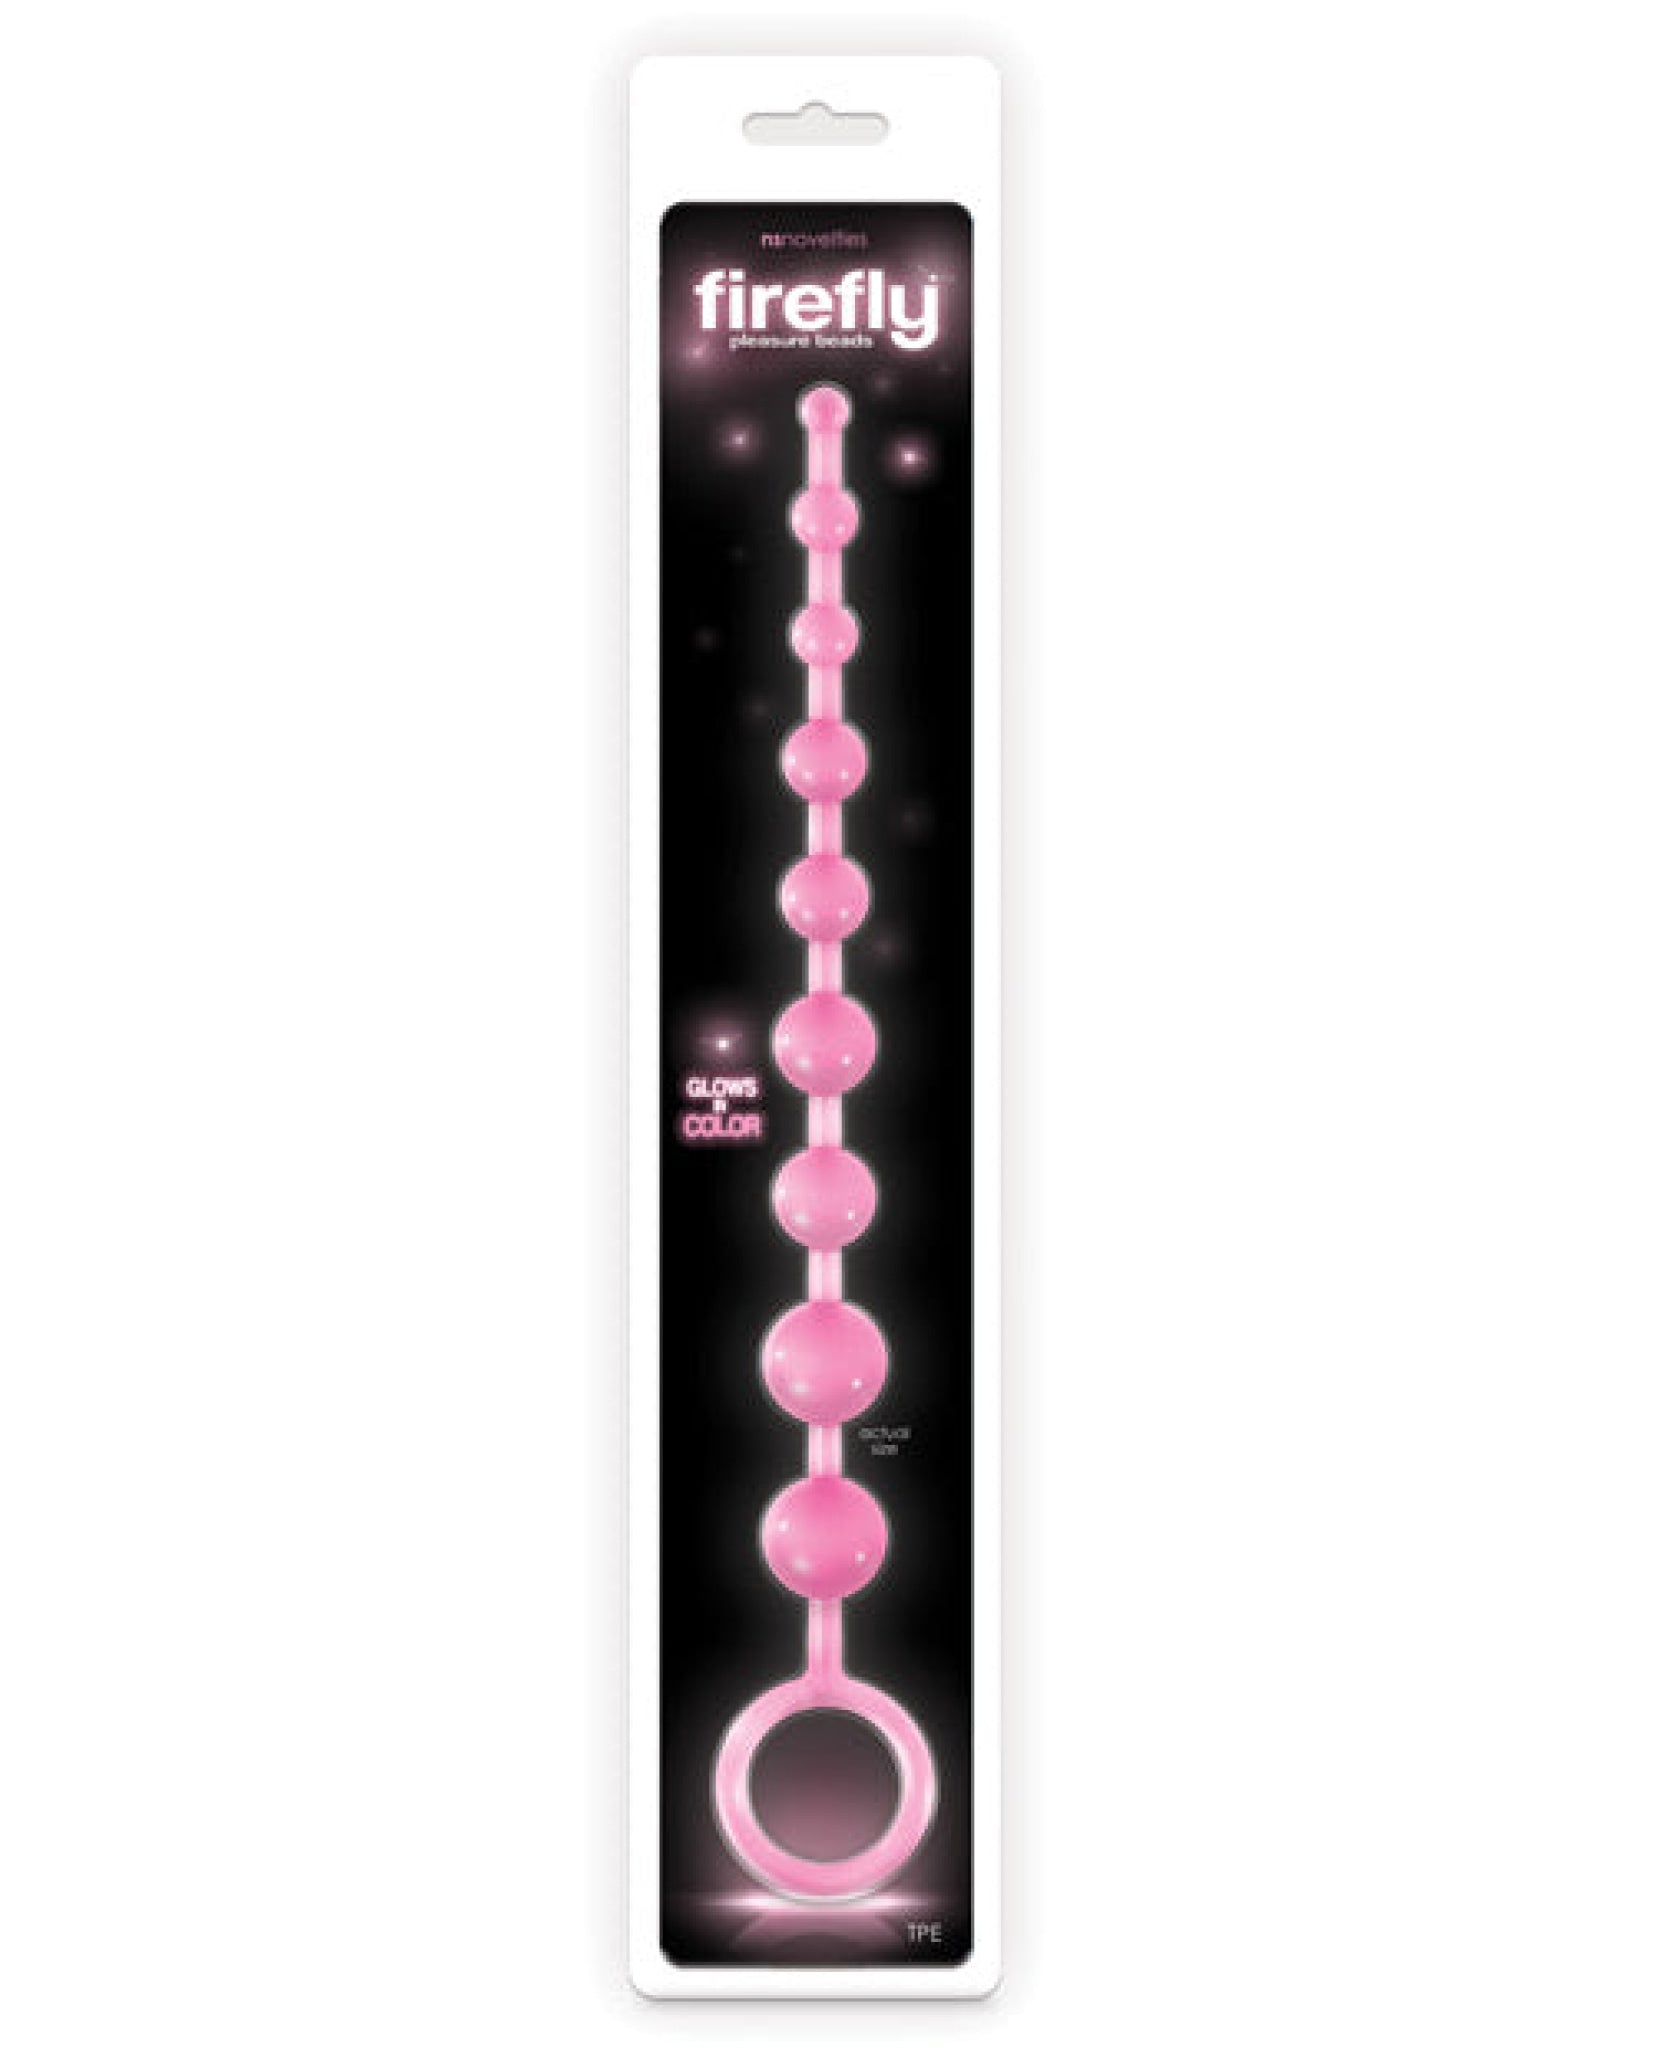 Firefly Pleasure Beads Firefly